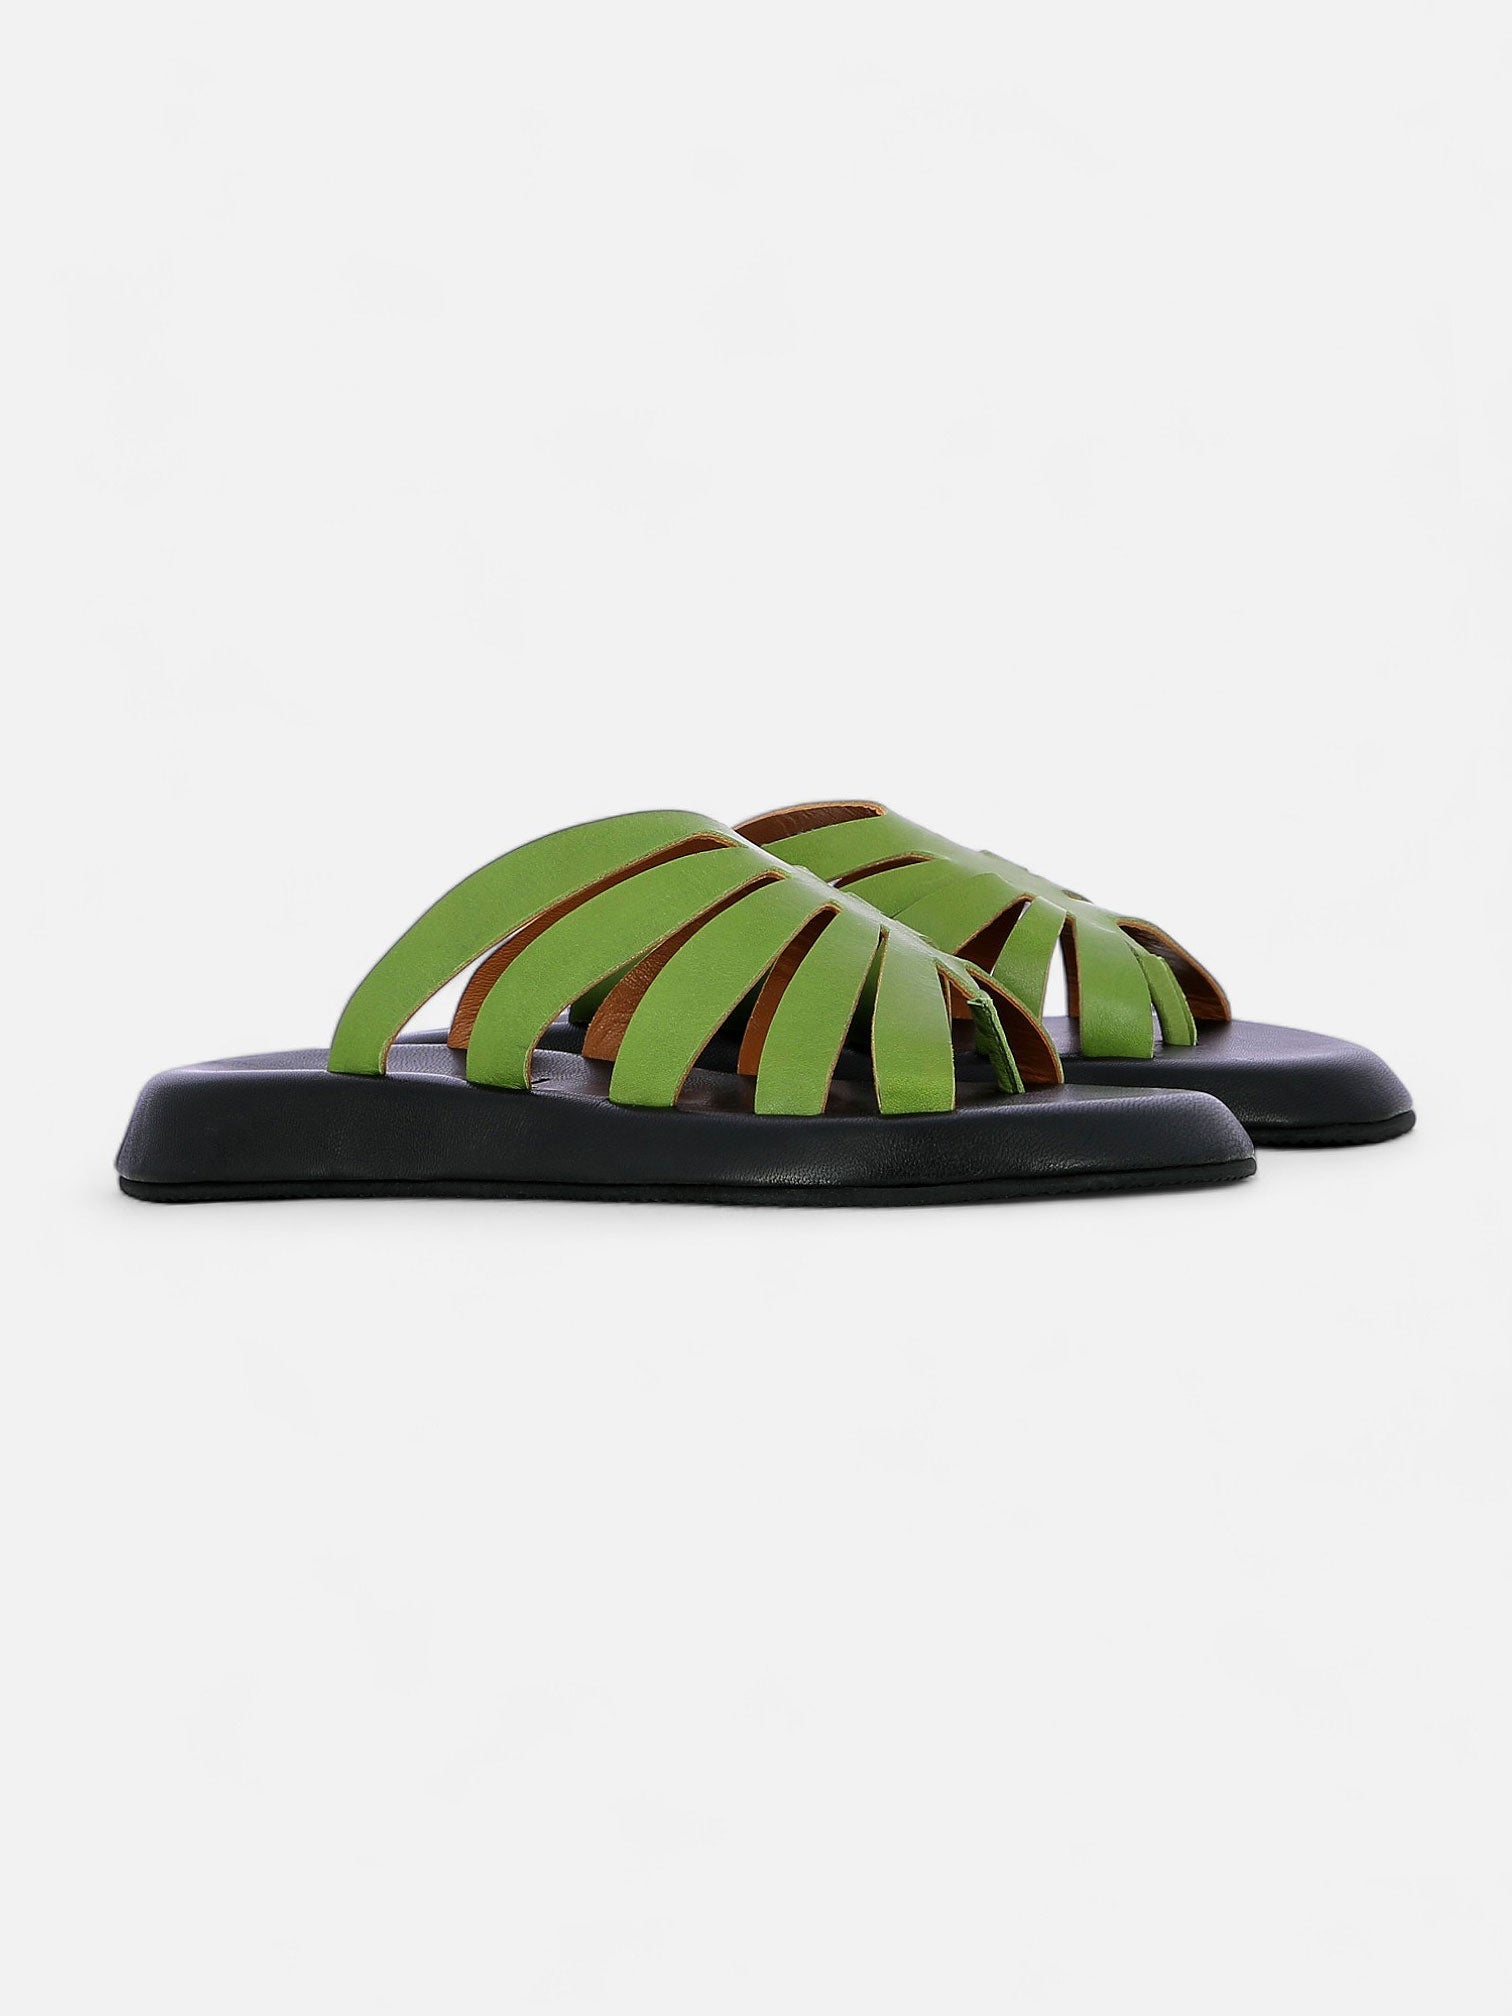 SANDALS - LAYEL sandals, vegetal calfskin green - 3606063629461 - Clergerie Paris - Europe